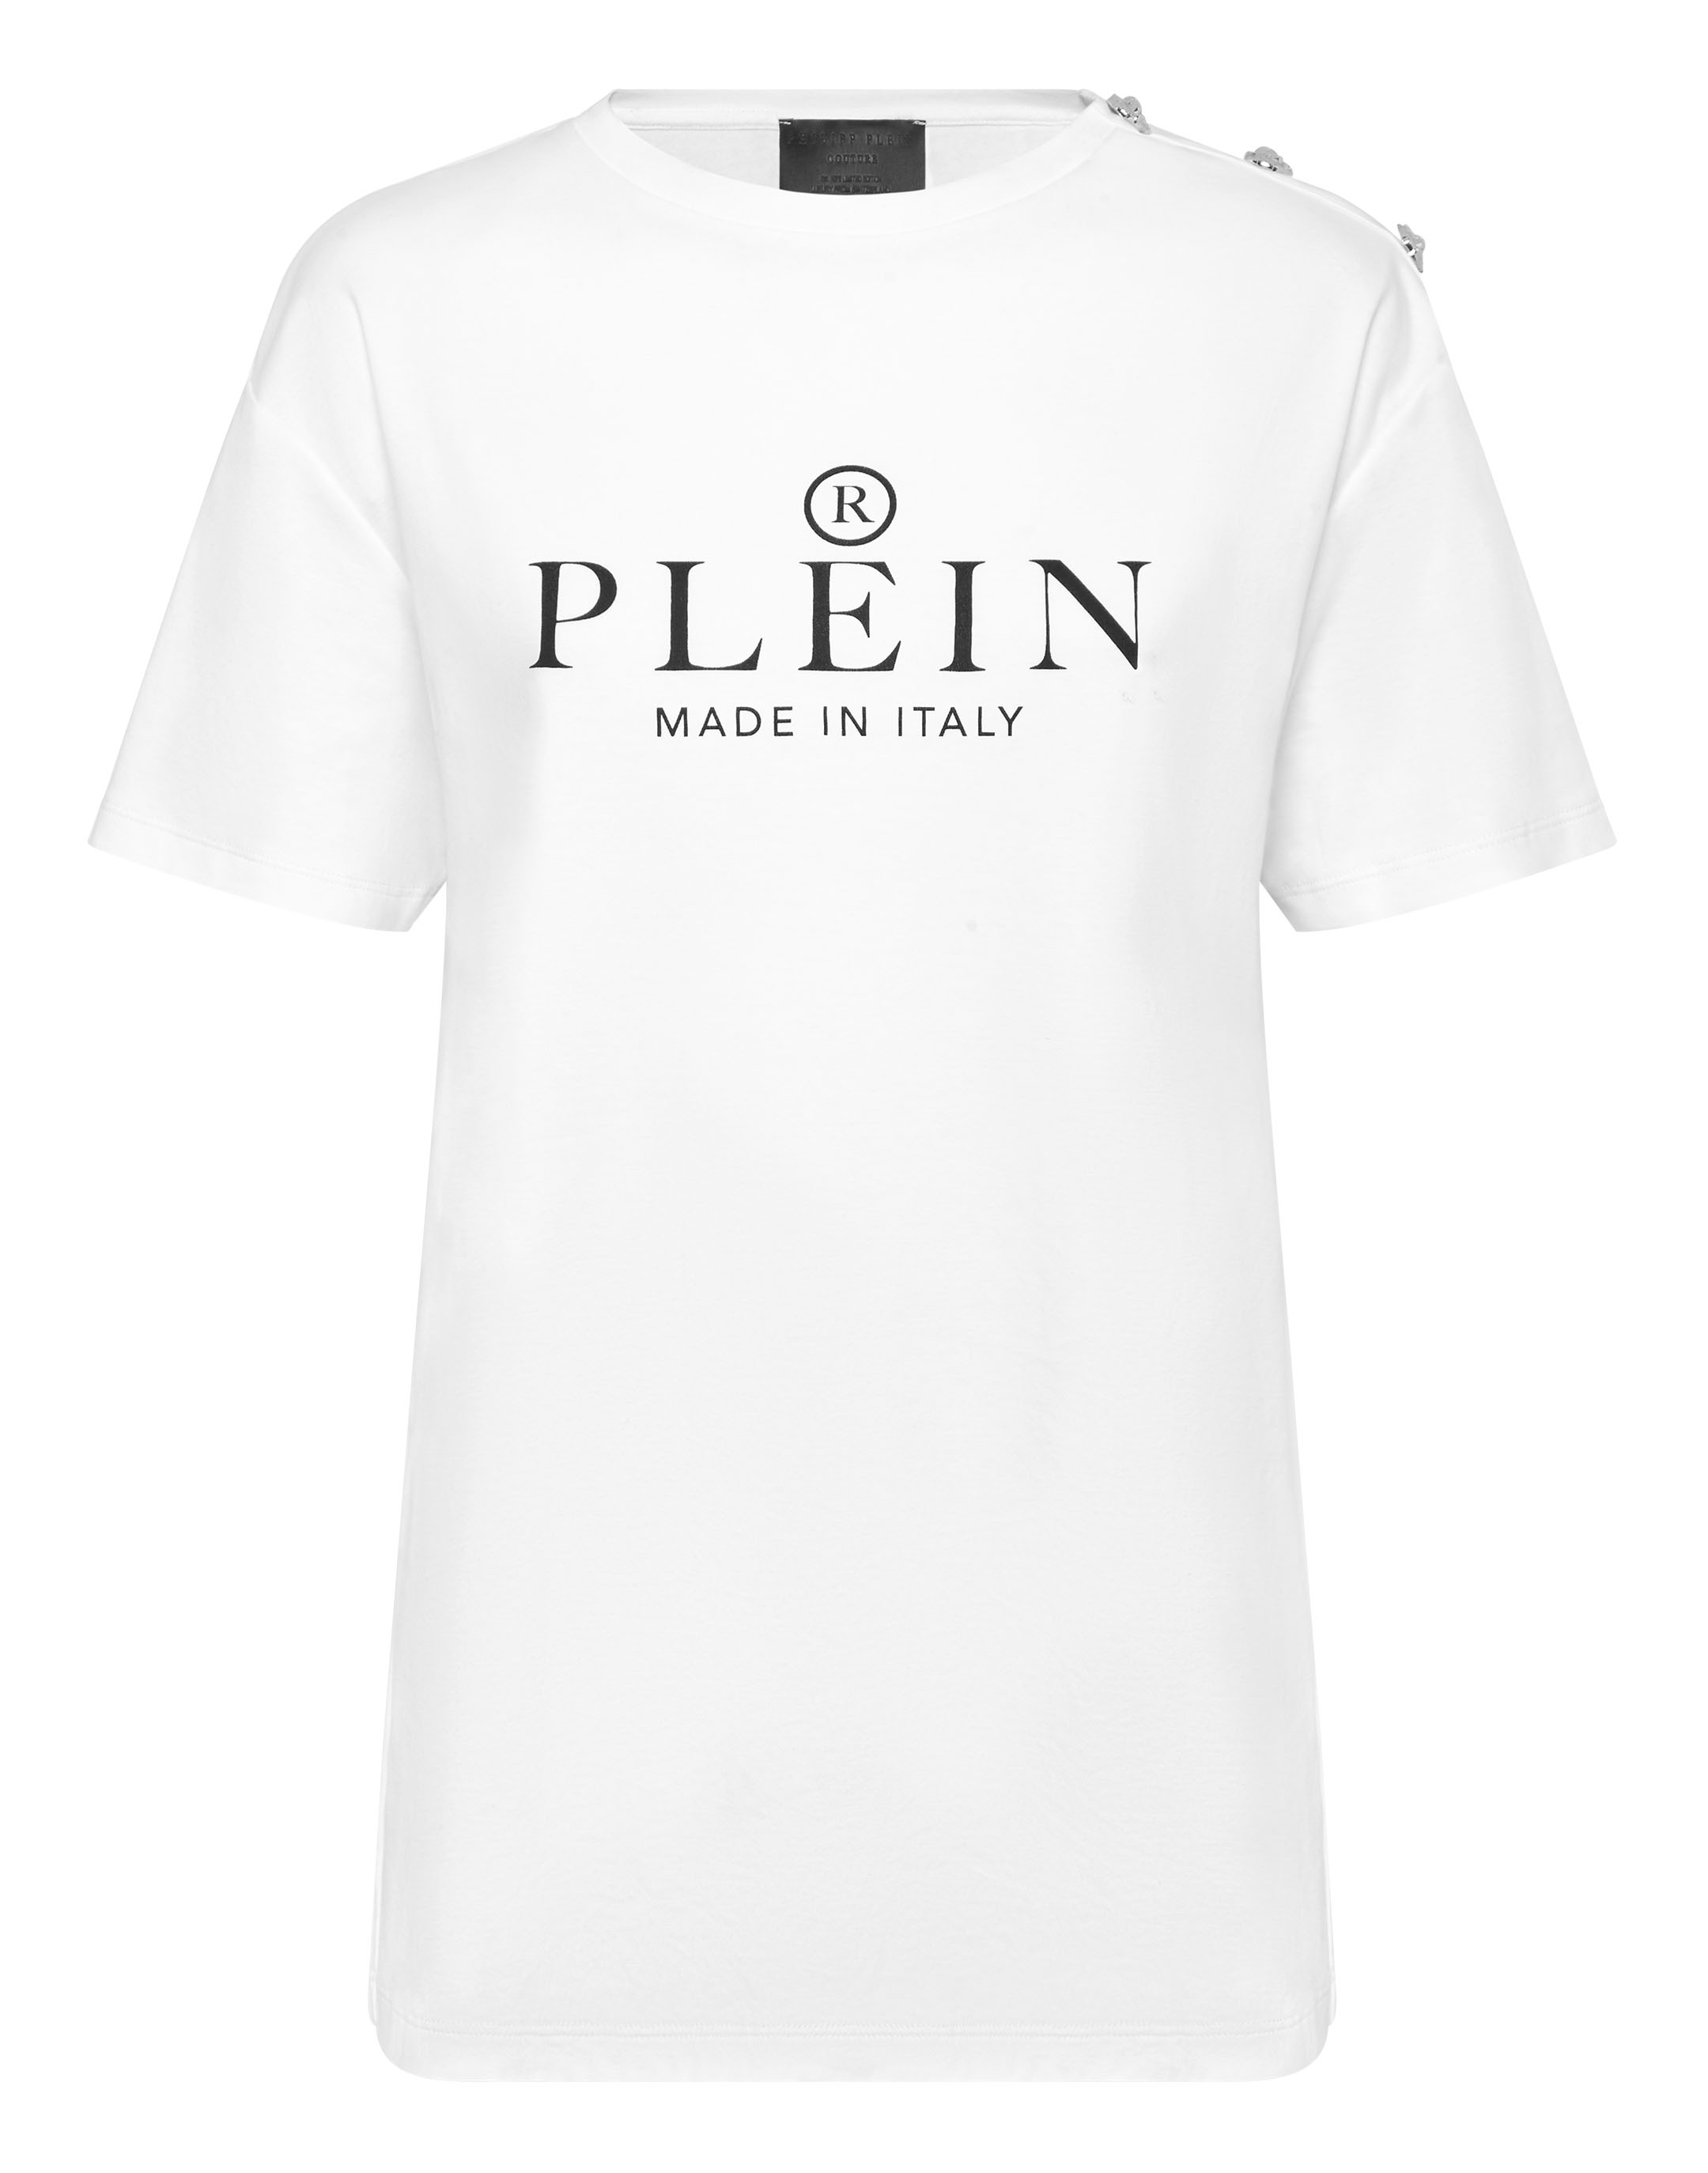 Human Made - Logo-Print Cotton-Jersey T-Shirt - White Human Made